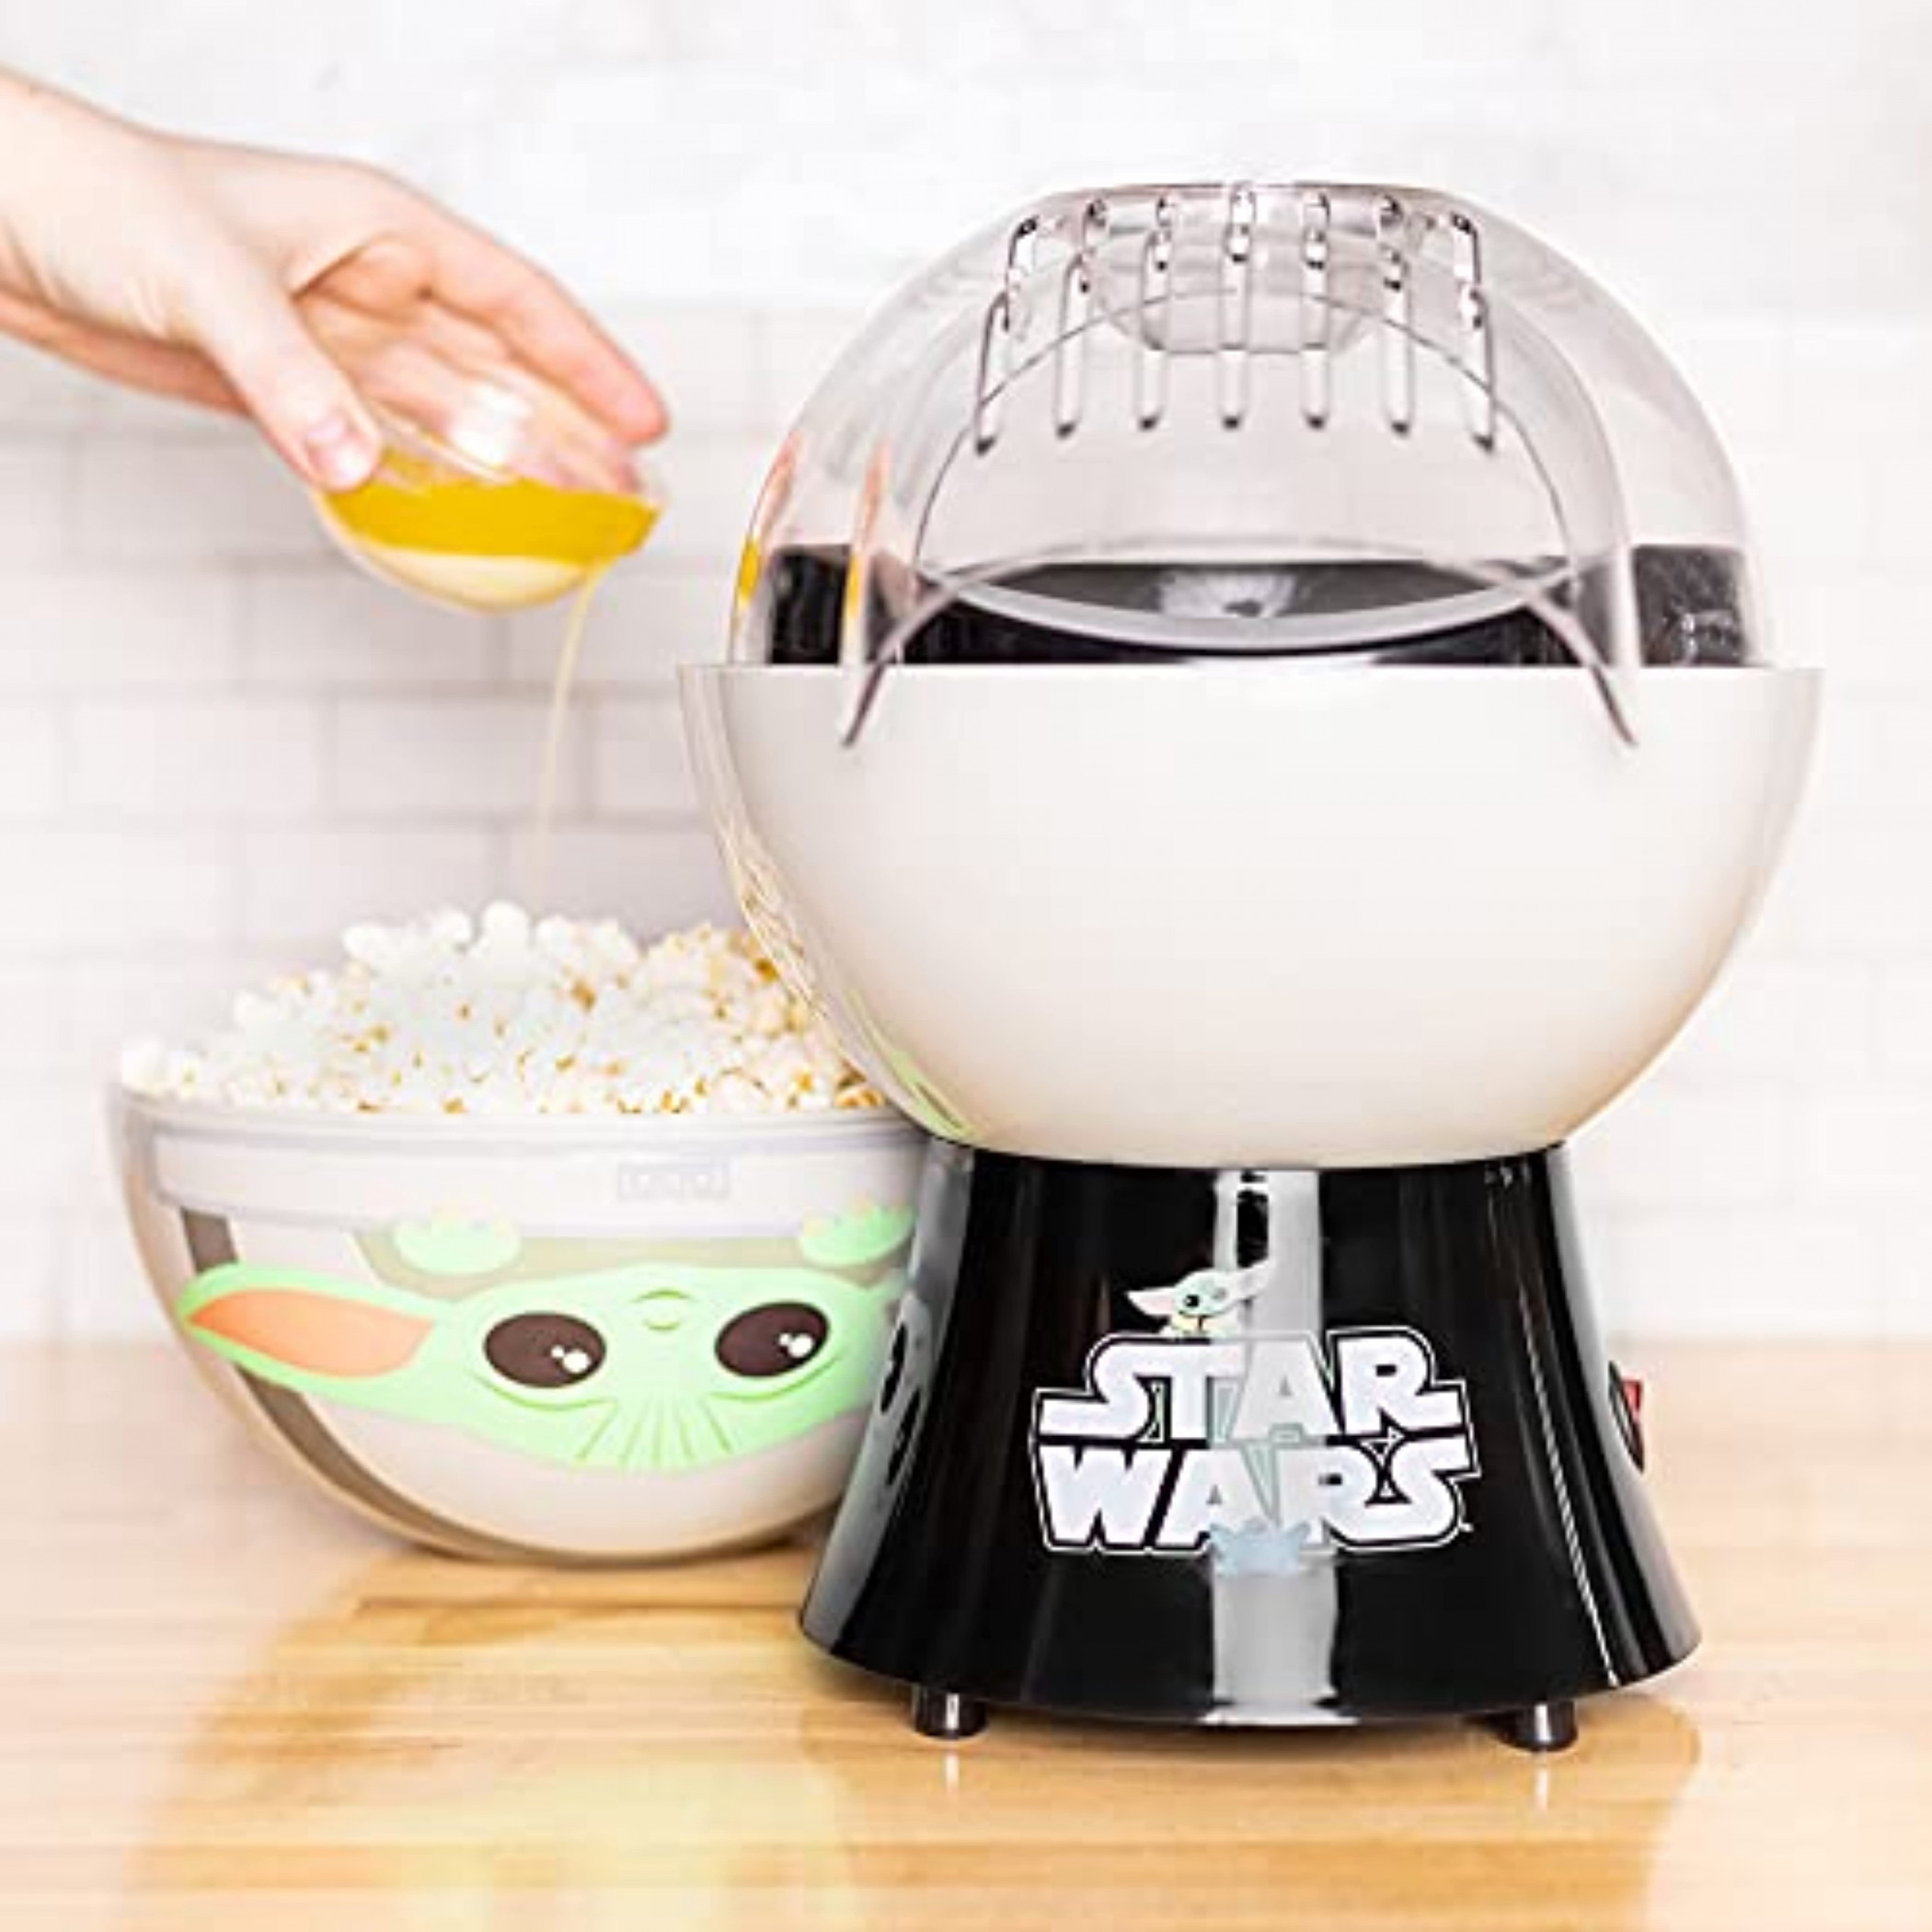 Star Wars The Mandalorian Baby Yoda Grogu Popcorn Maker